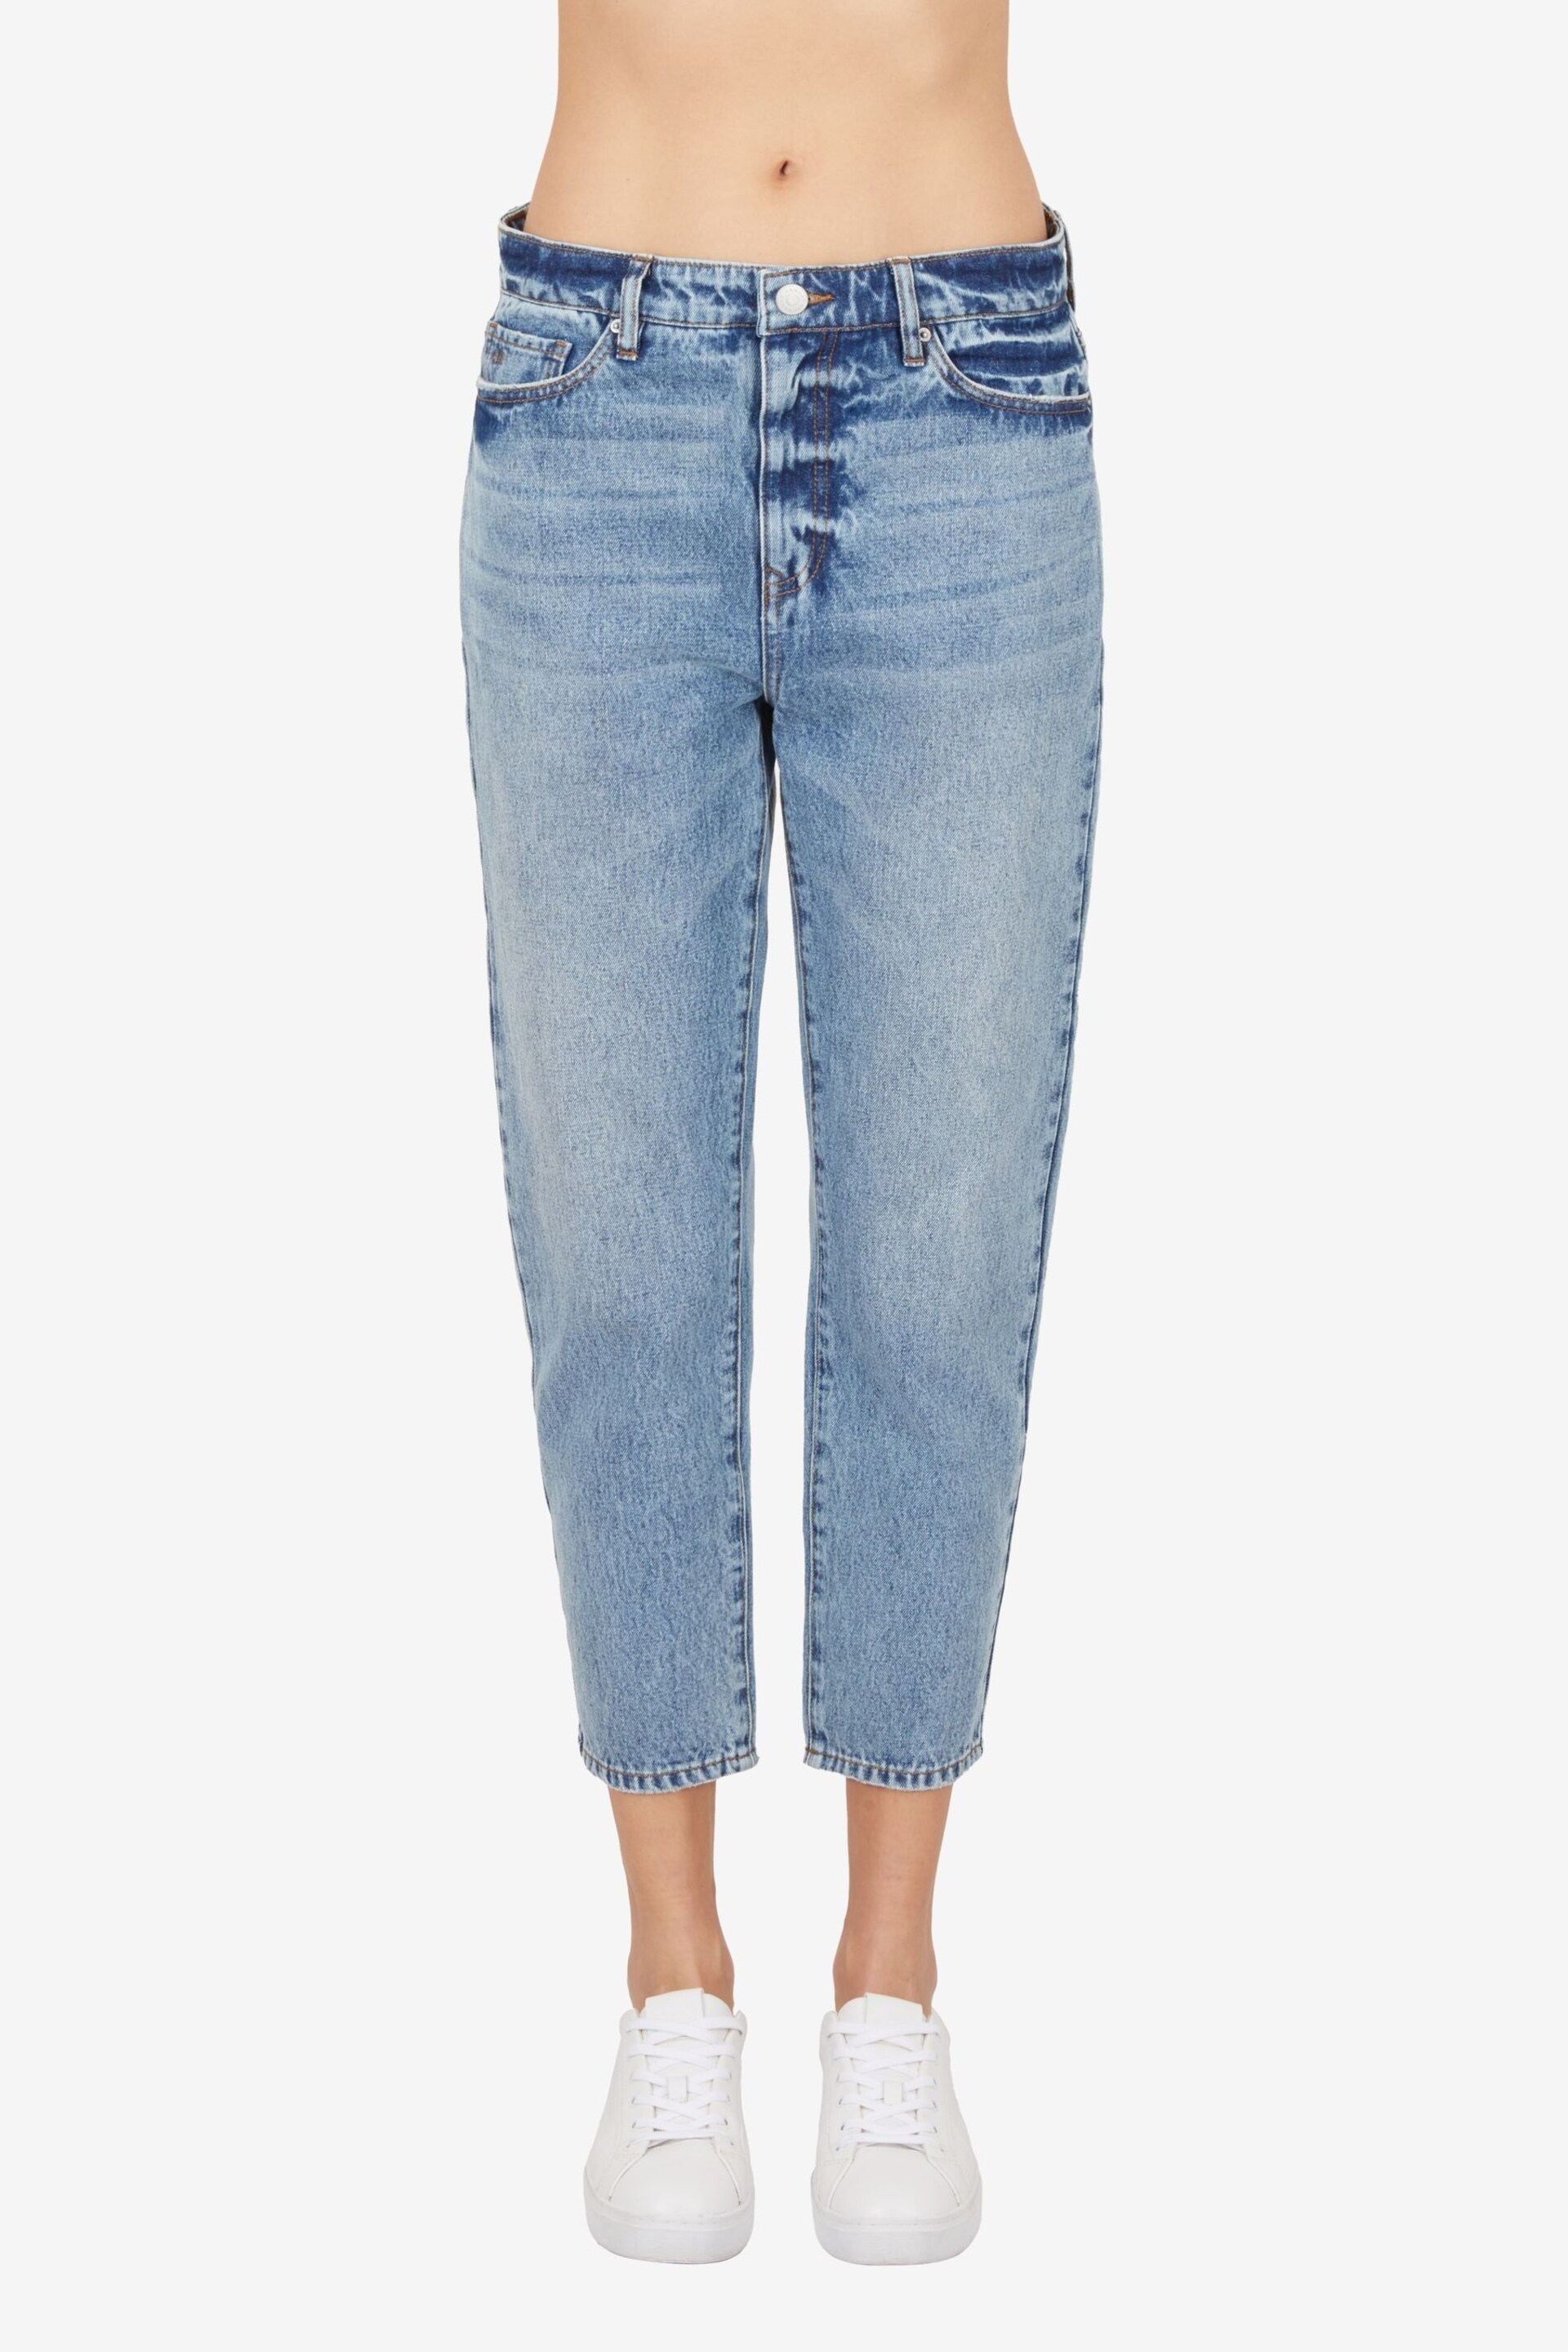 Armani Exchange Denim Lightwash Boyfriend Fit Jeans - Image 1 of 5